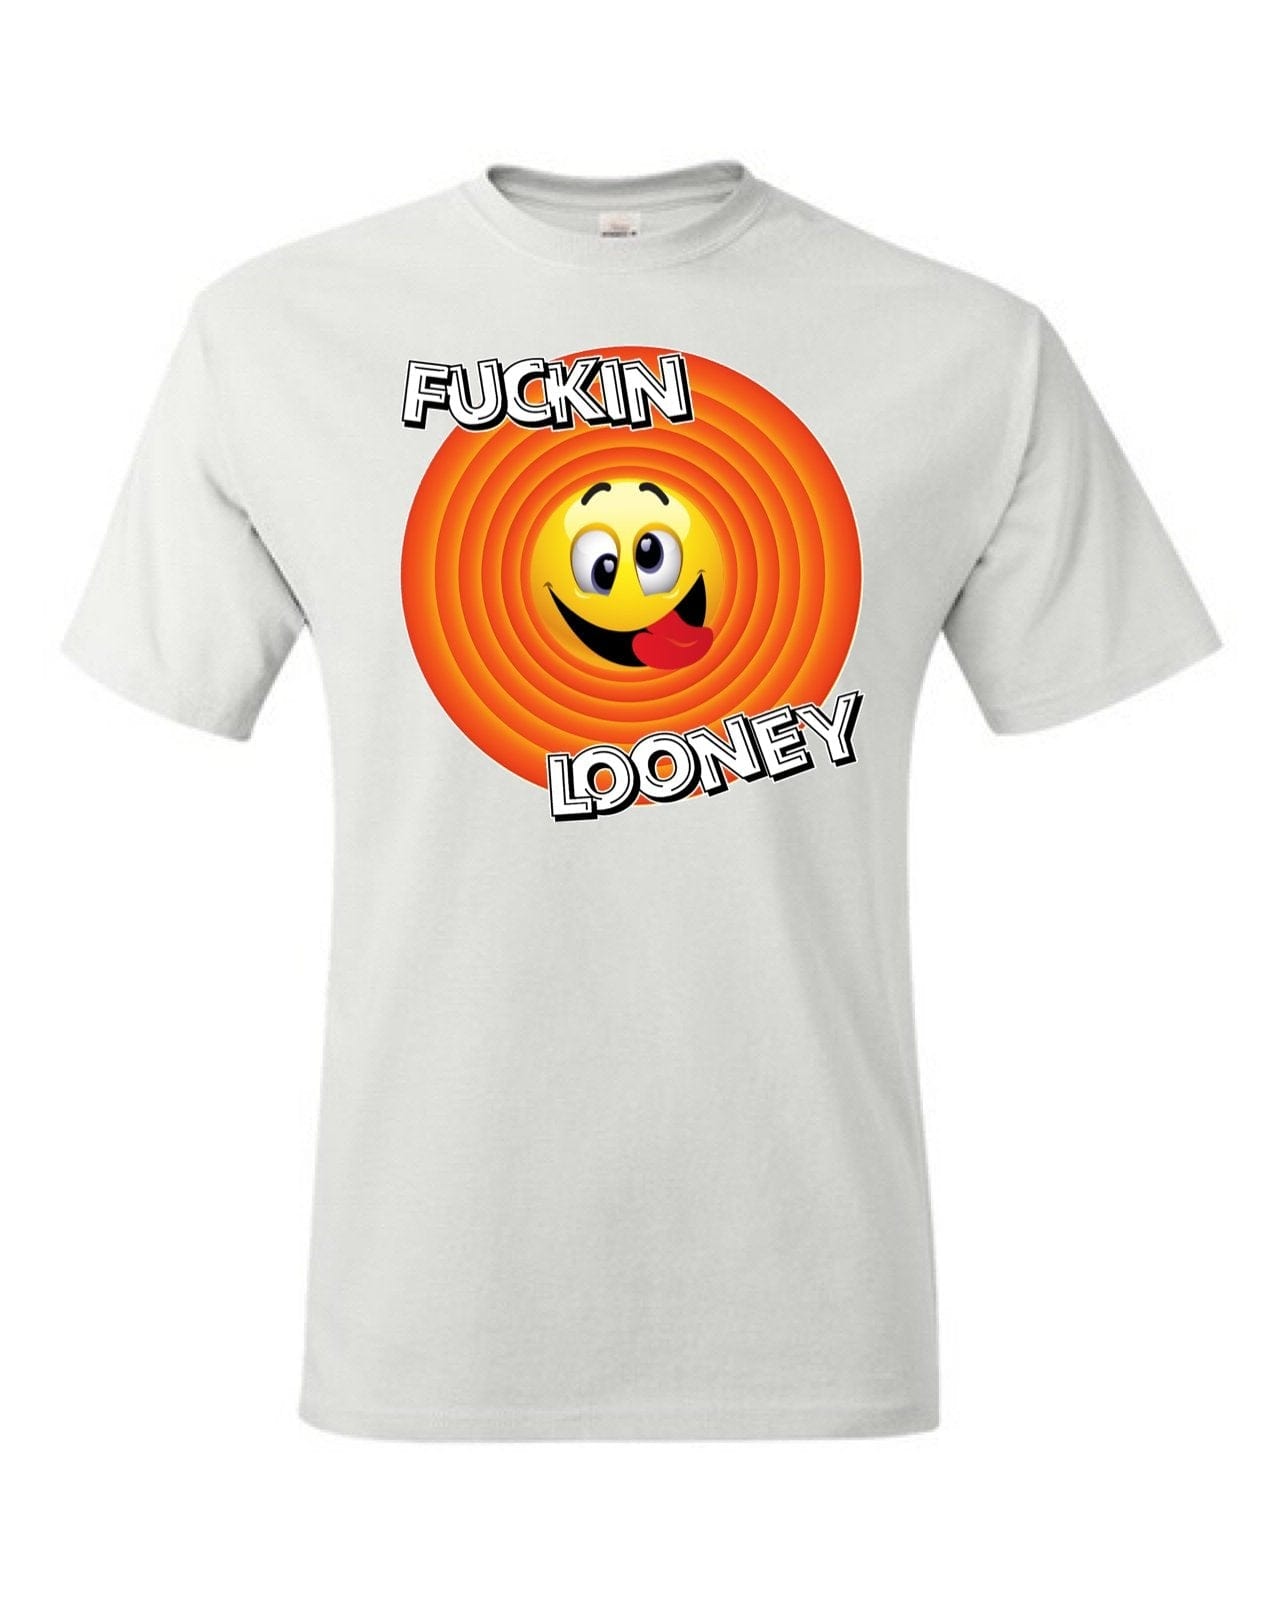 InsensitiviTees Shirts S / White Fuckin Looney